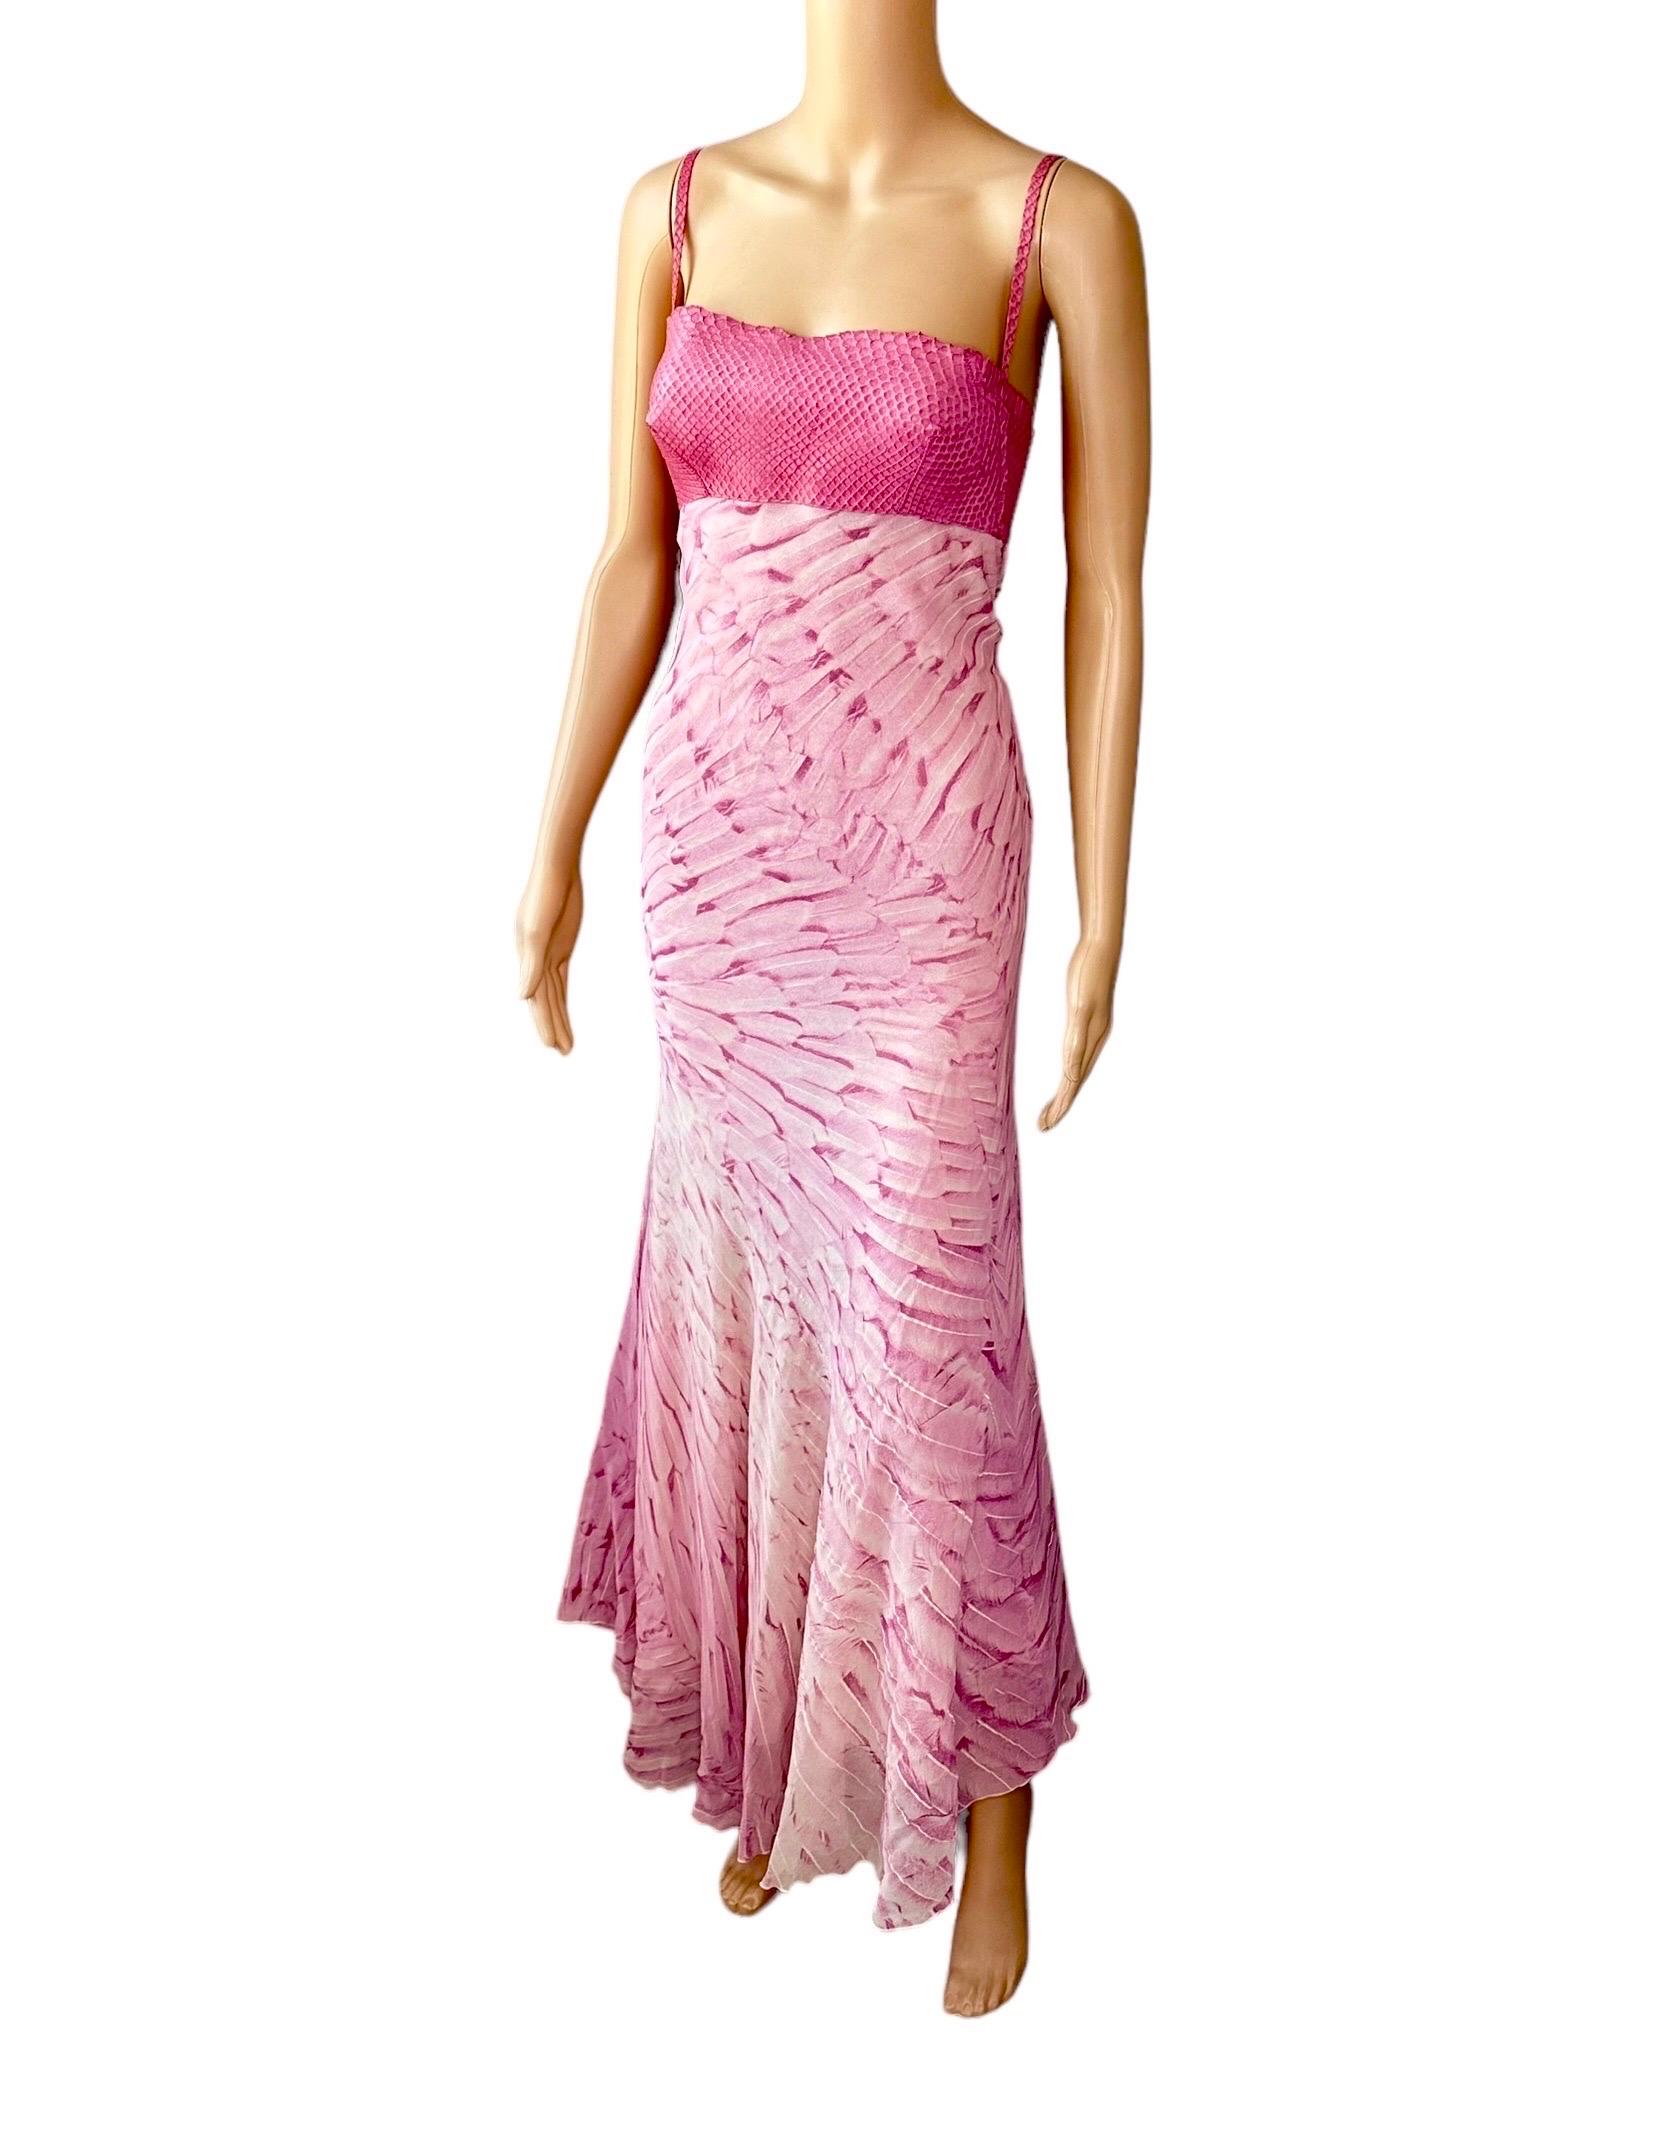 Roberto Cavalli S/S 1999 Runway Snakeskin Feather Print Silk Maxi Evening Dress For Sale 3